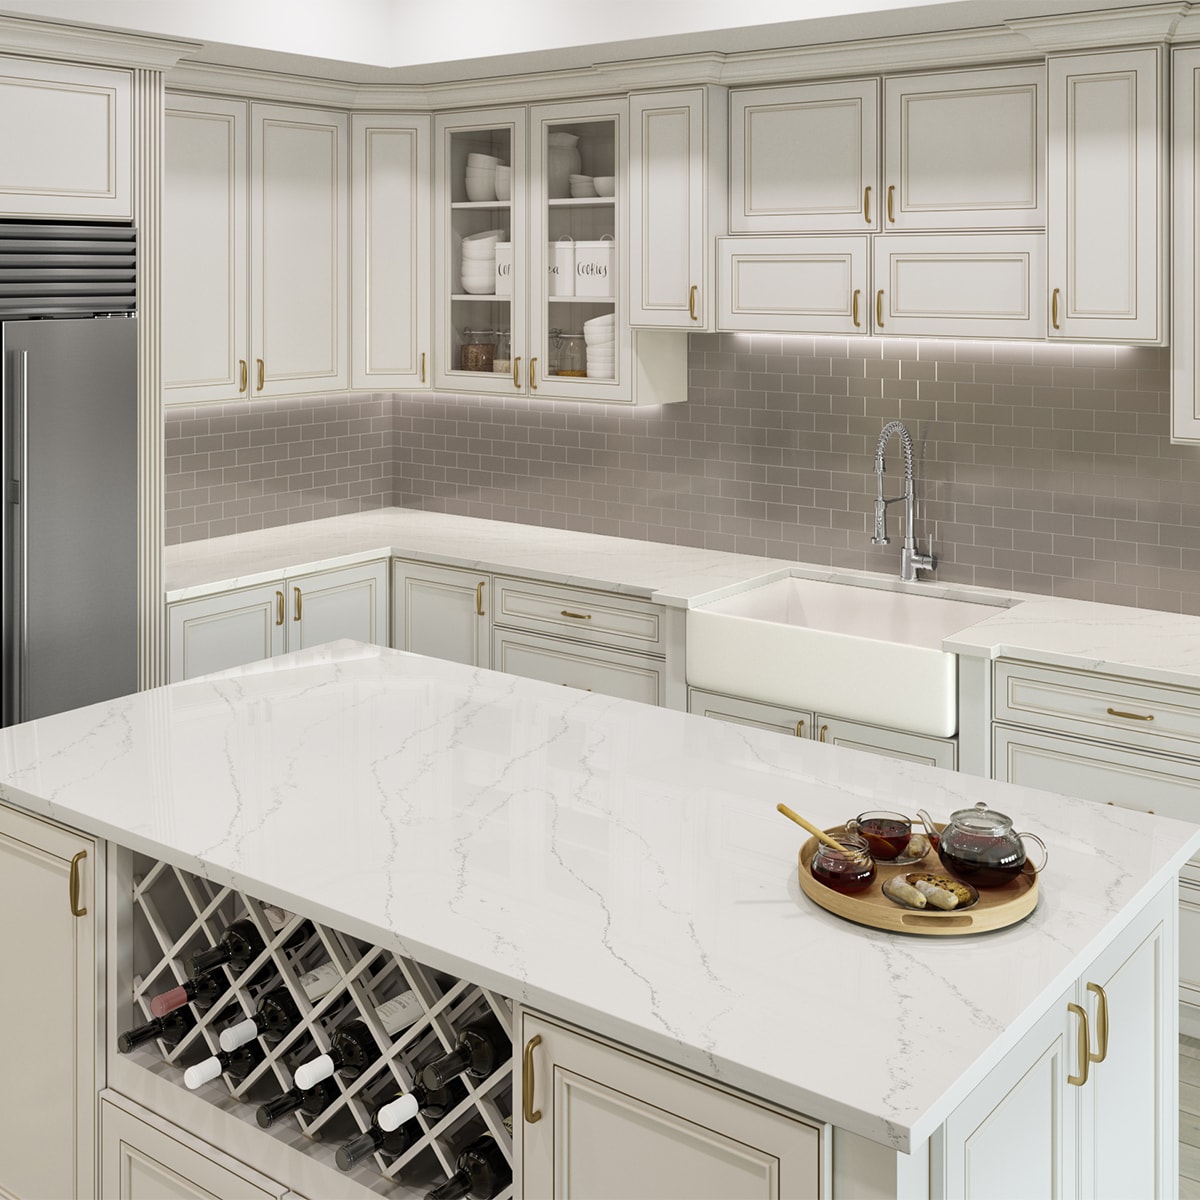 allen + roth Alluring Quartz White Kitchen Countertop SAMPLE (4-in x 4 ...